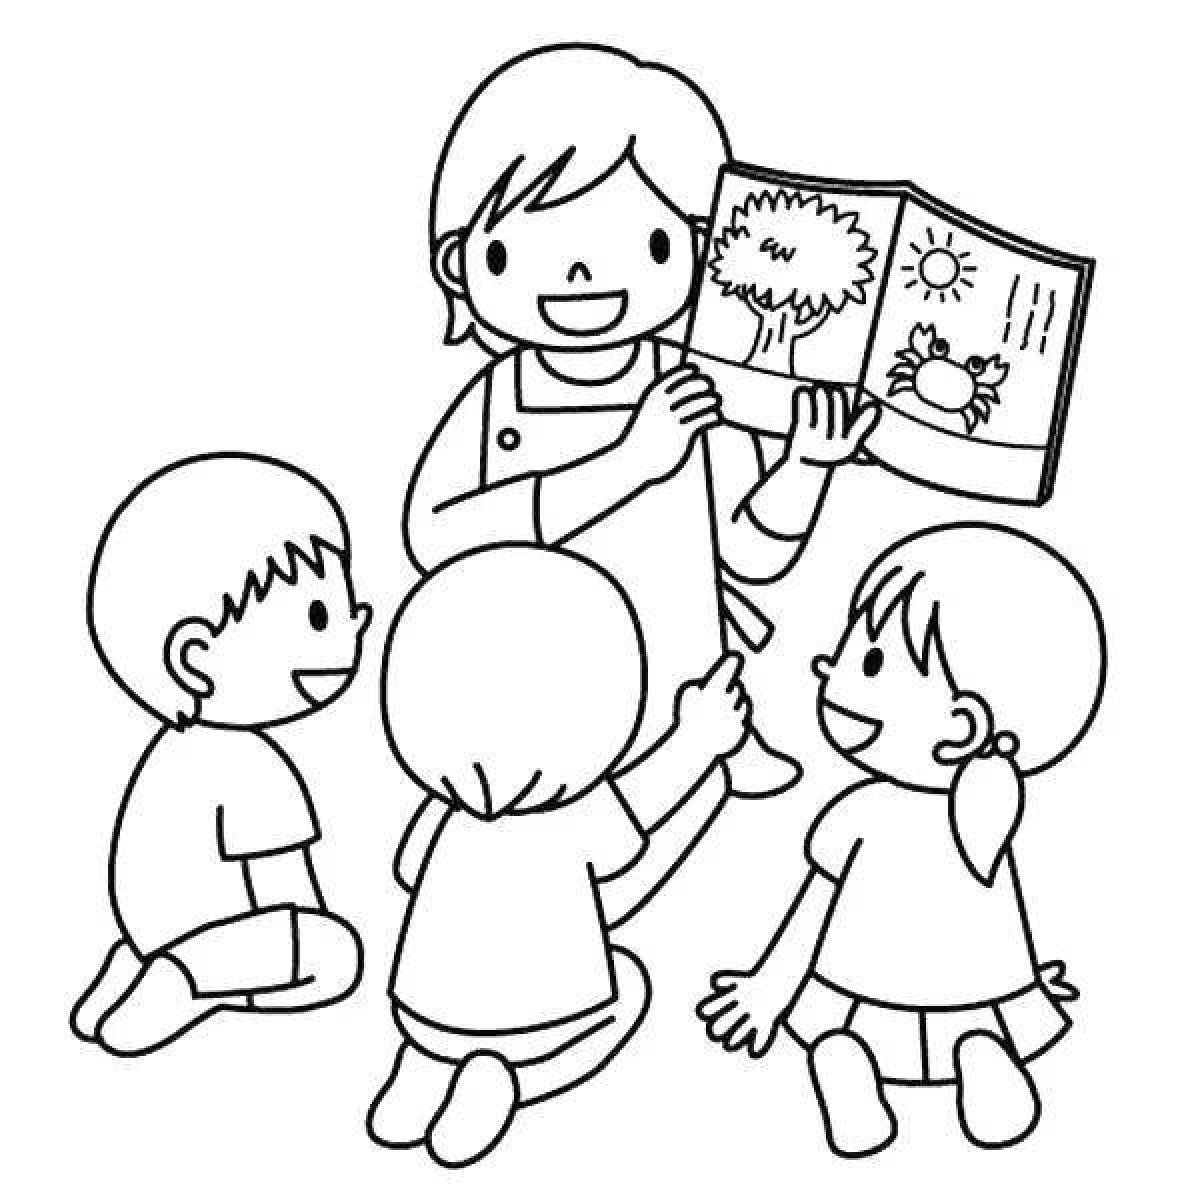 Kindergarten teacher and children coloring page